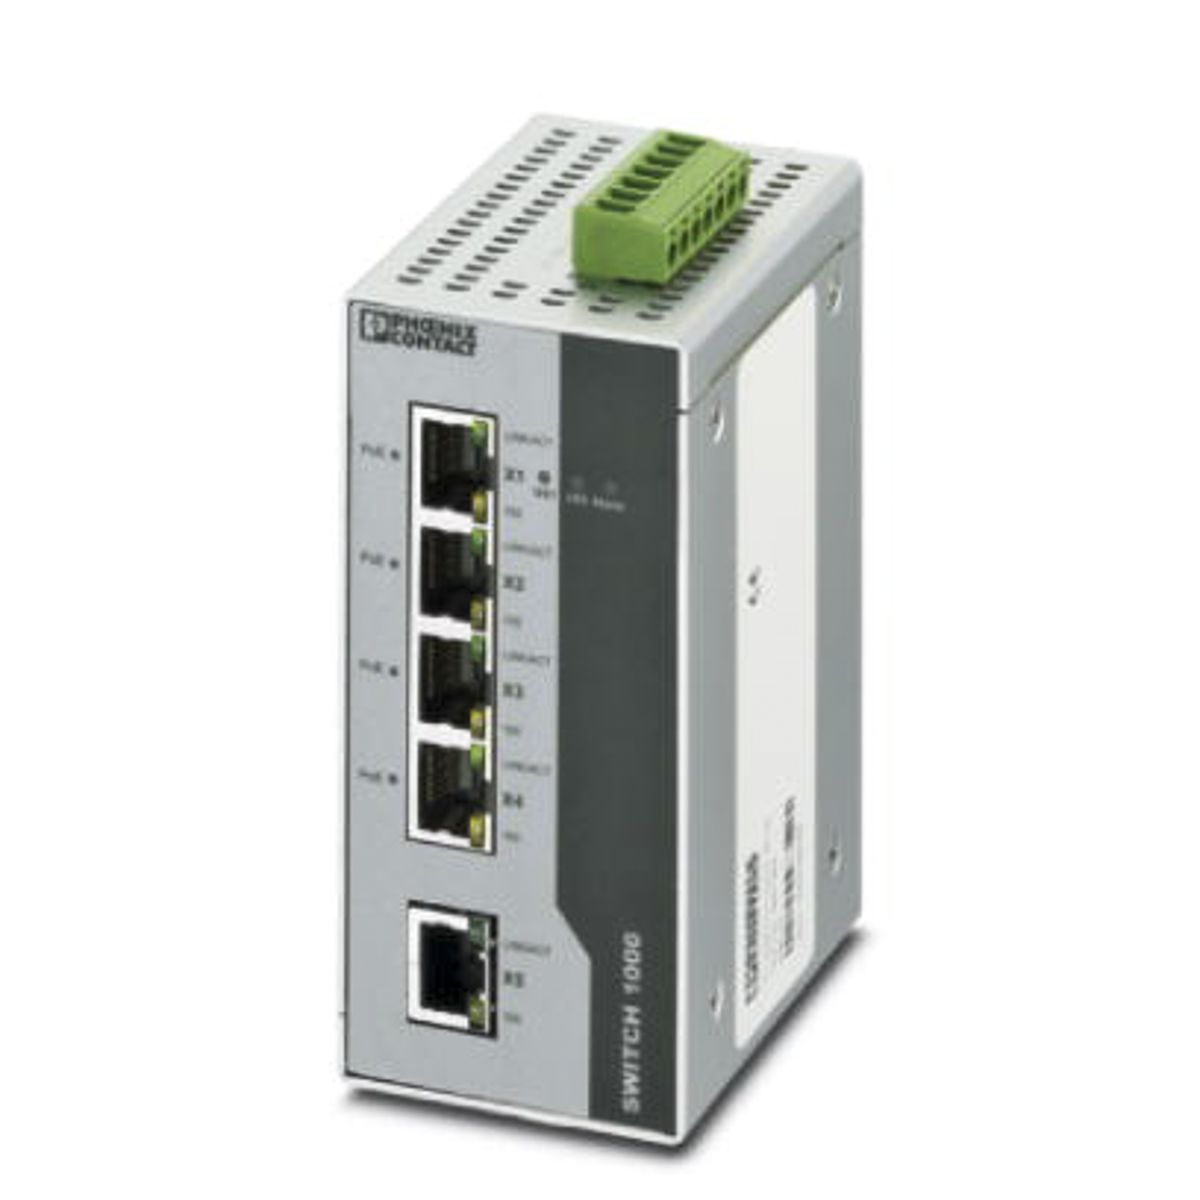 Phoenix Contact DIN Rail Mount Ethernet Switch, 5 RJ45 port, 24V dc, 100Mbit/s Transmission Speed